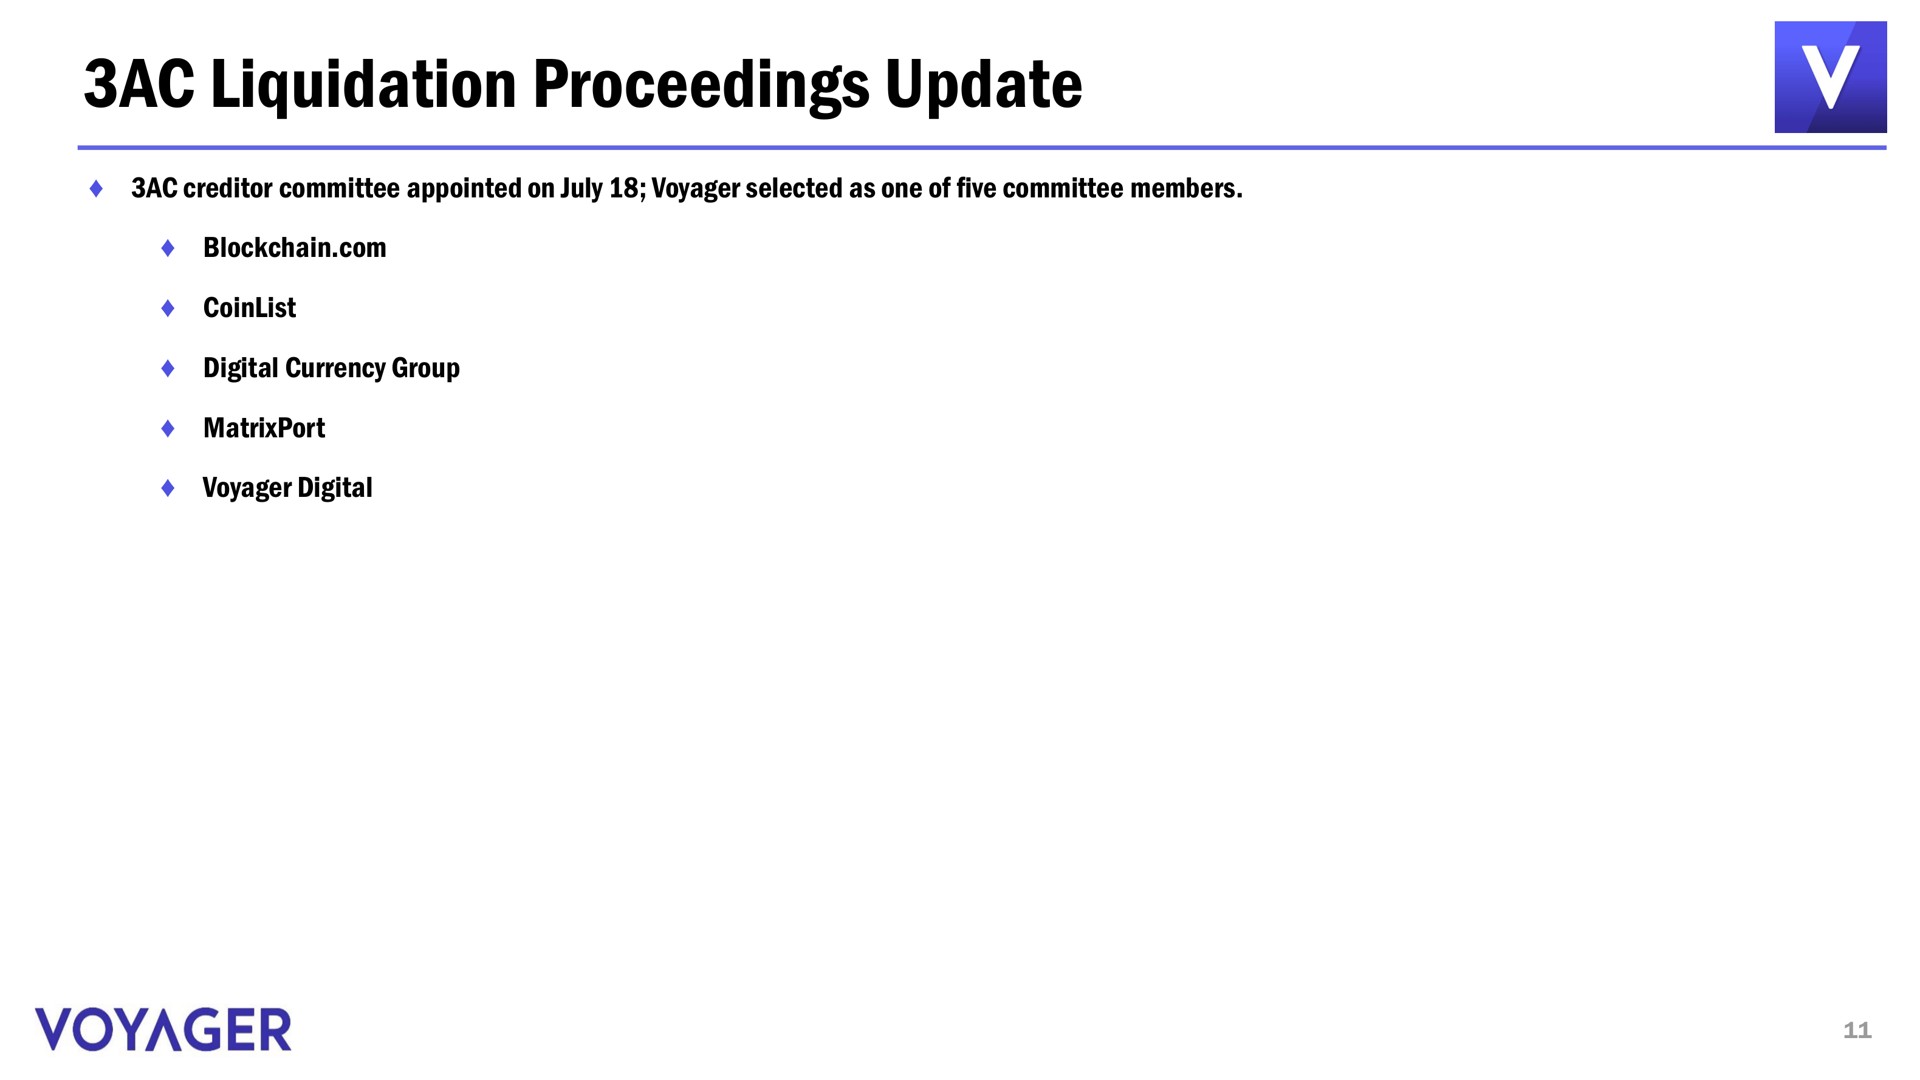 liquidation proceedings update voyager | Voyager Digital